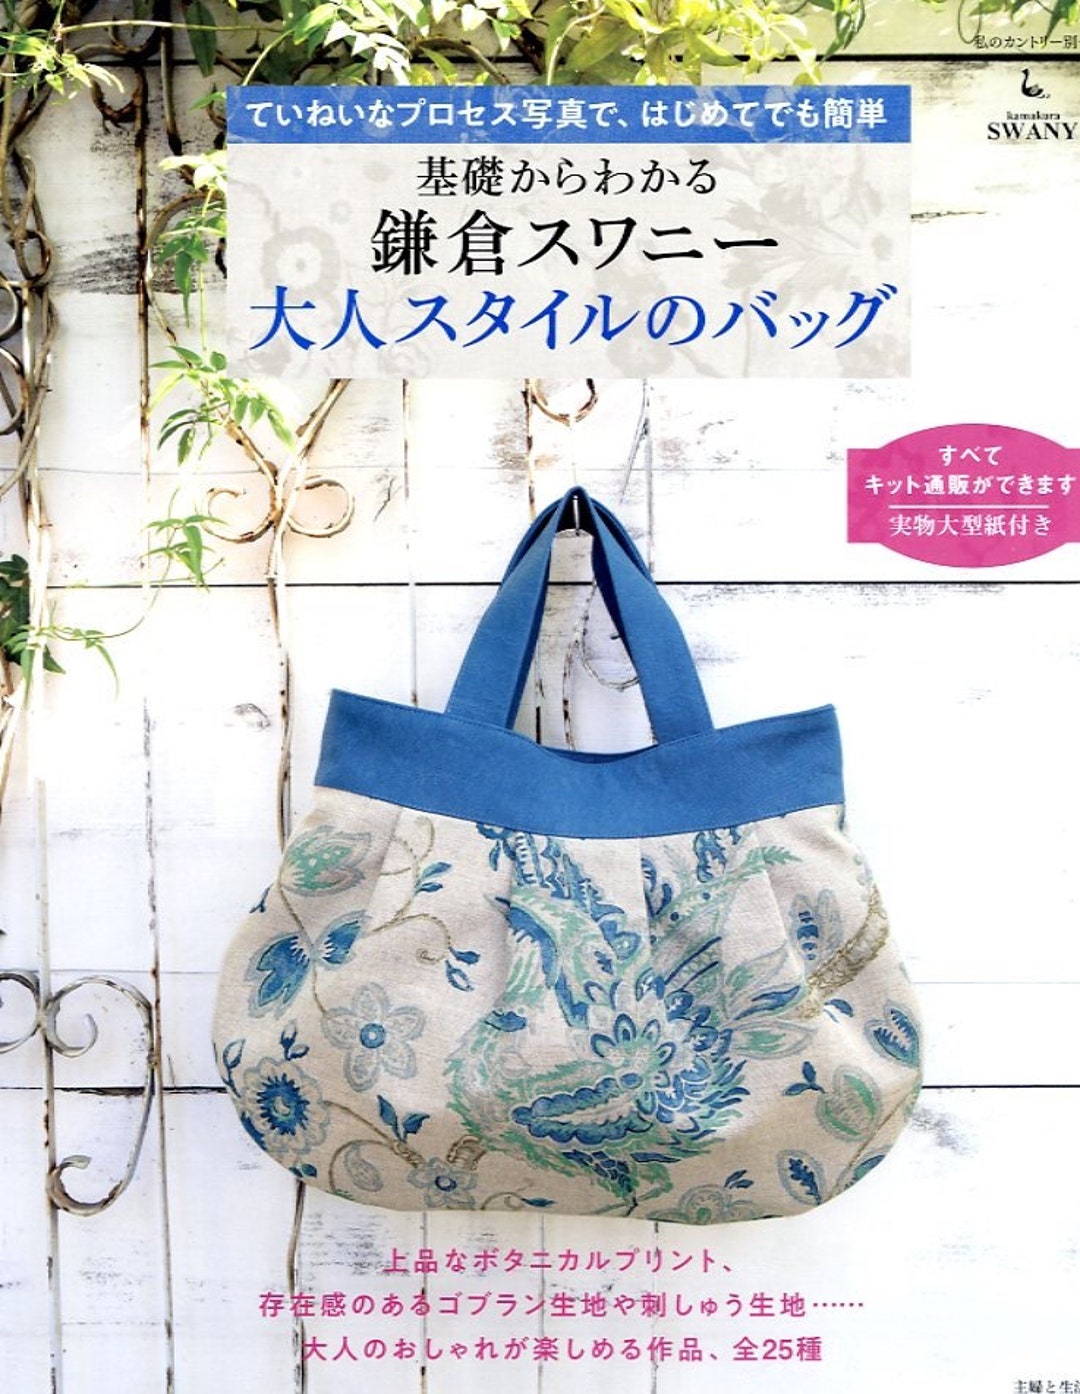 Kamakura　Book　Stlyle　日本　Swany's　Adult　Craft　Bags　Japanese　Etsy